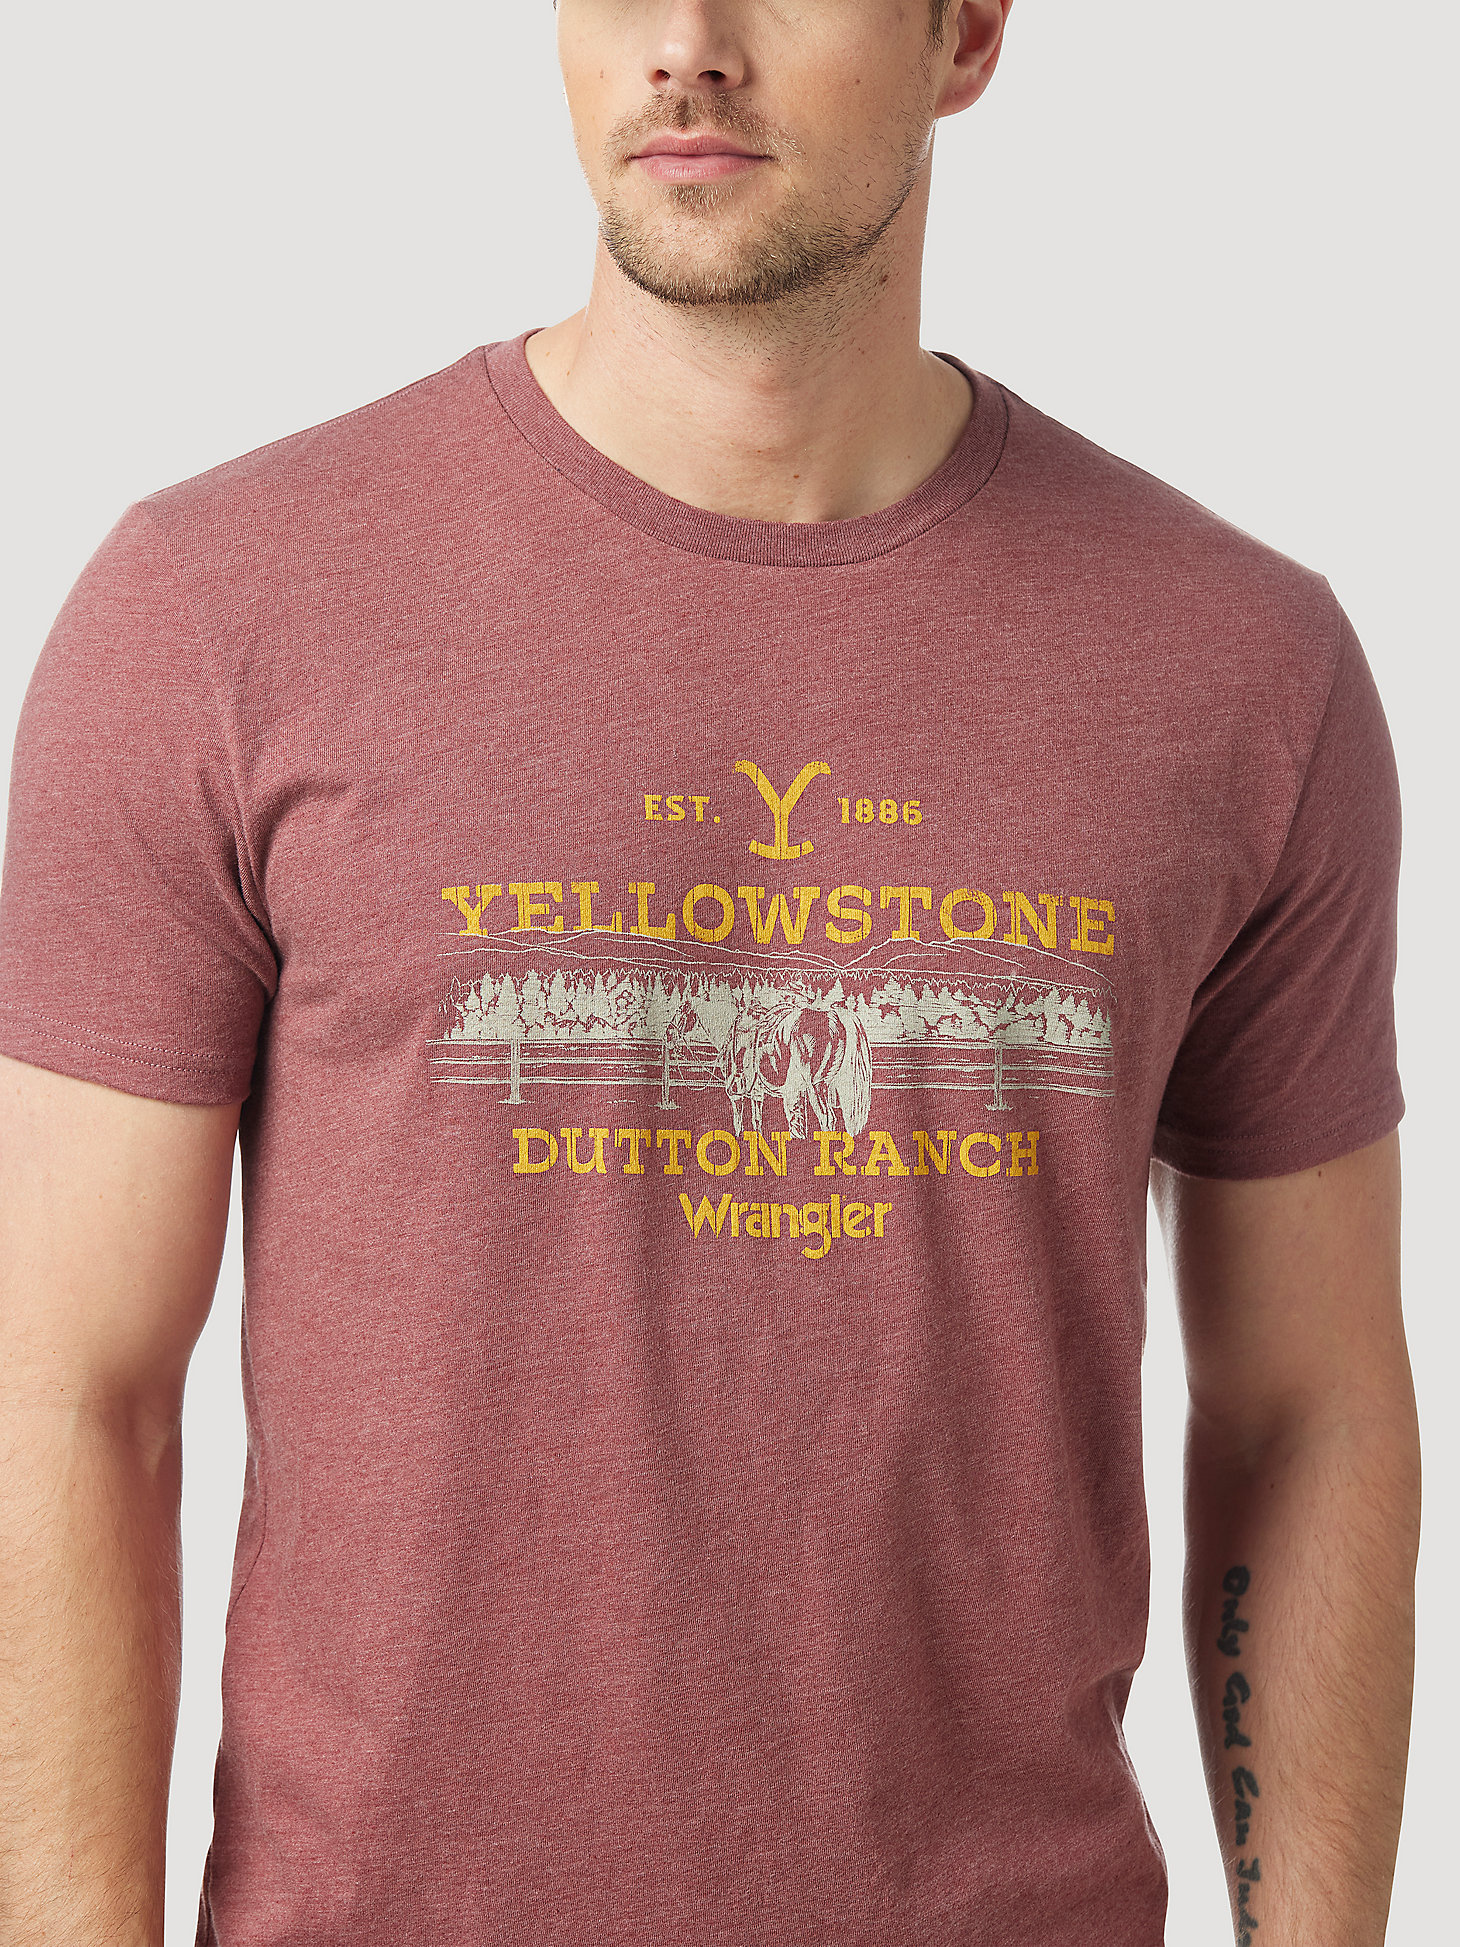 Wrangler x Yellowstone Men's Dutton Ranch T-Shirt in Burgundy Heather alternative view 2